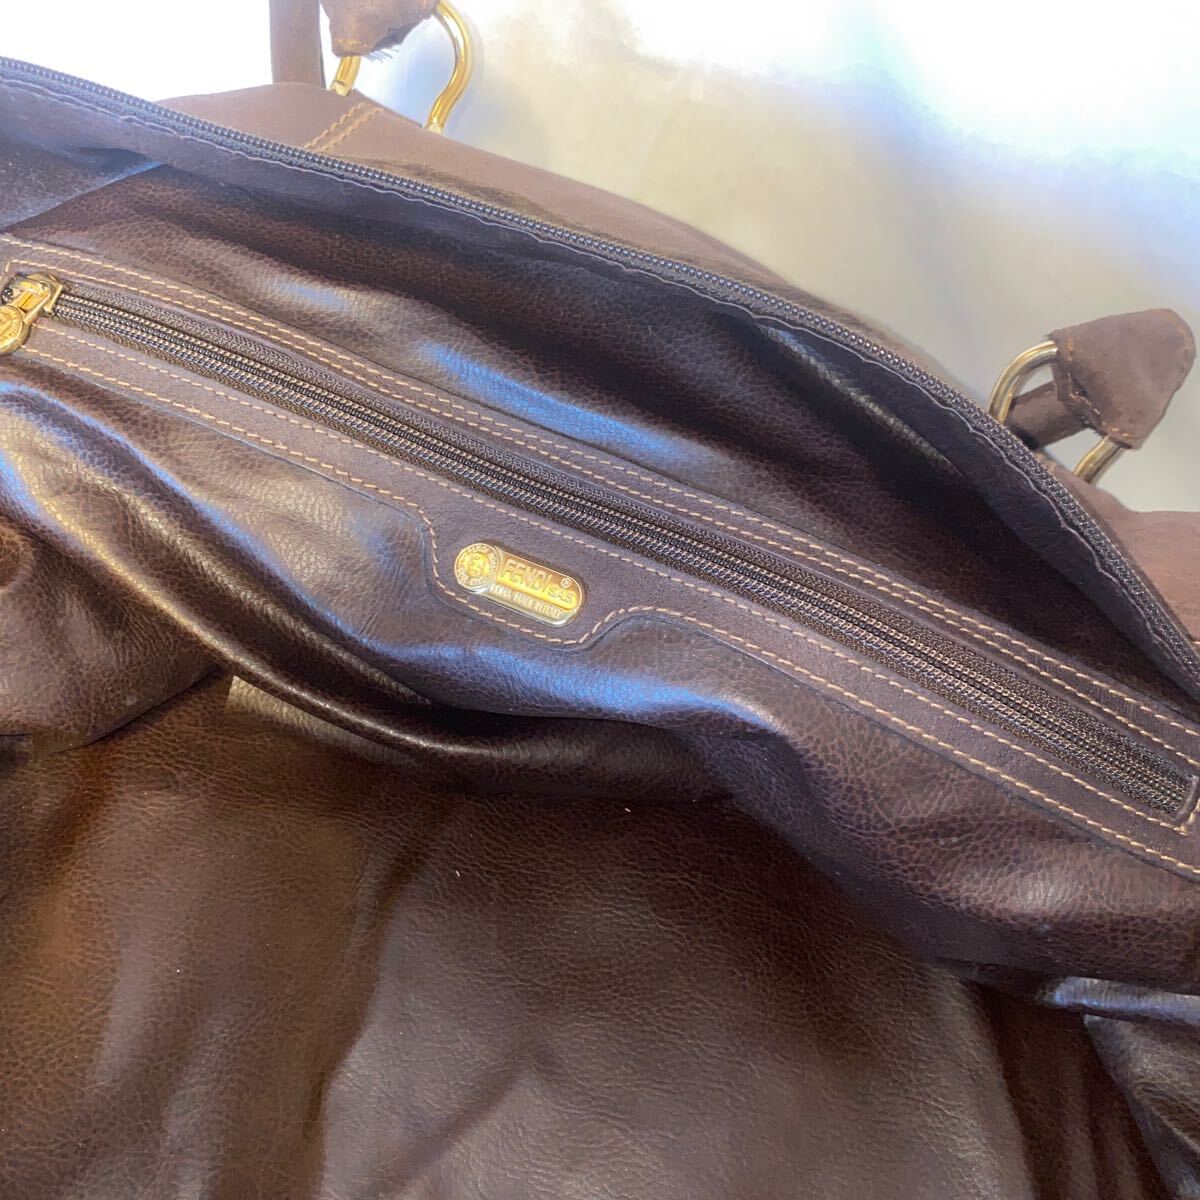 FENDI Fendi сумка "Boston bag" натуральная кожа Brown несколько раз применяющийся товар 